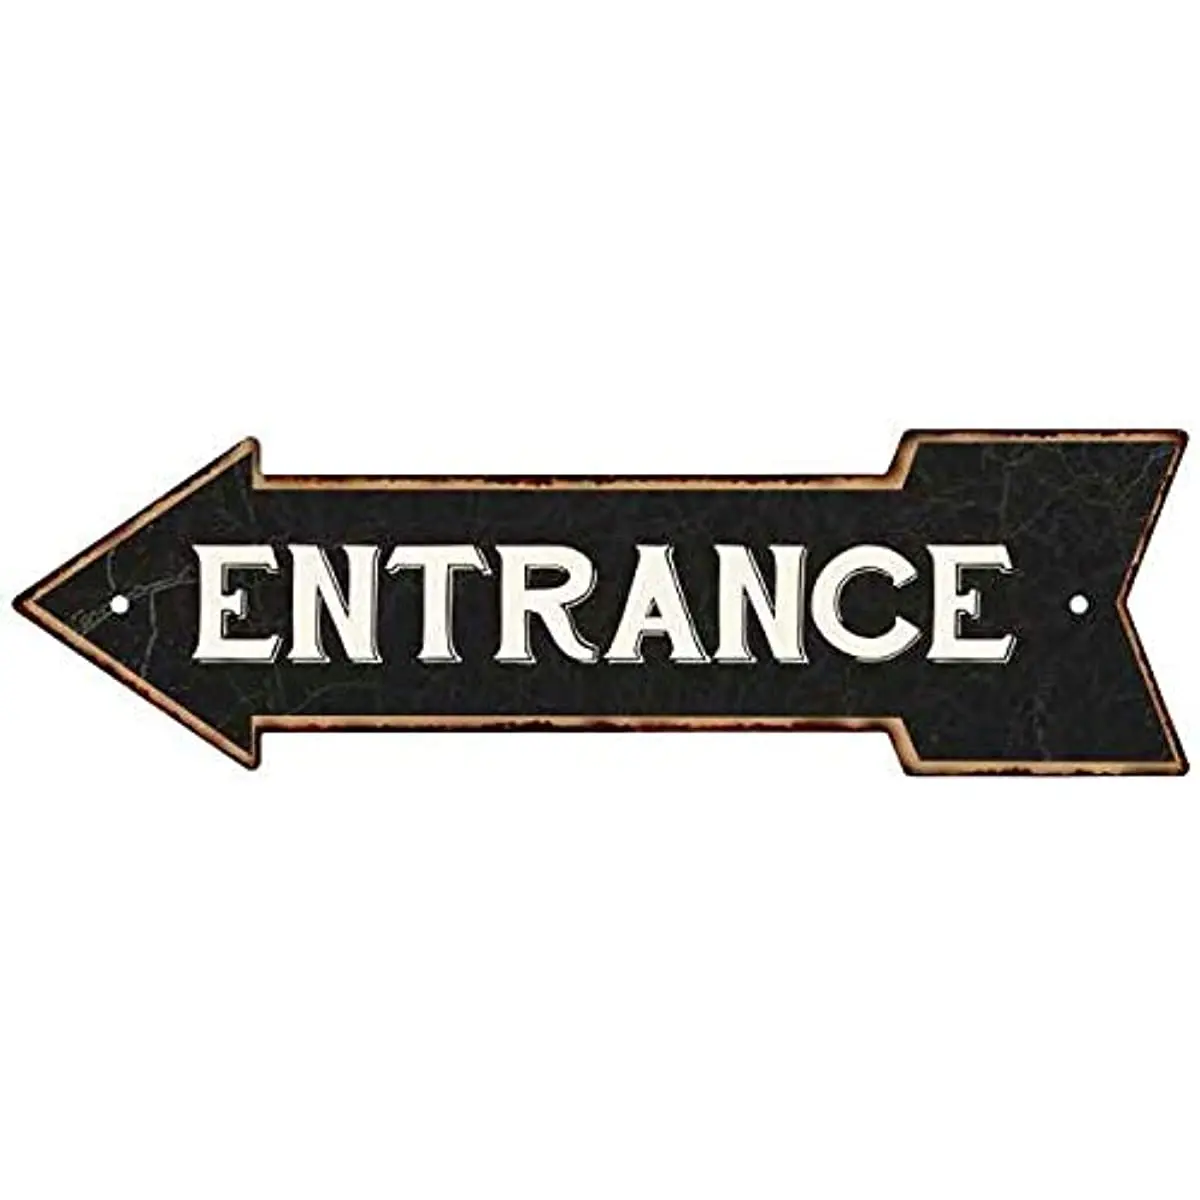 

Entrance Left Arrow Vintage Looking Metal Sign